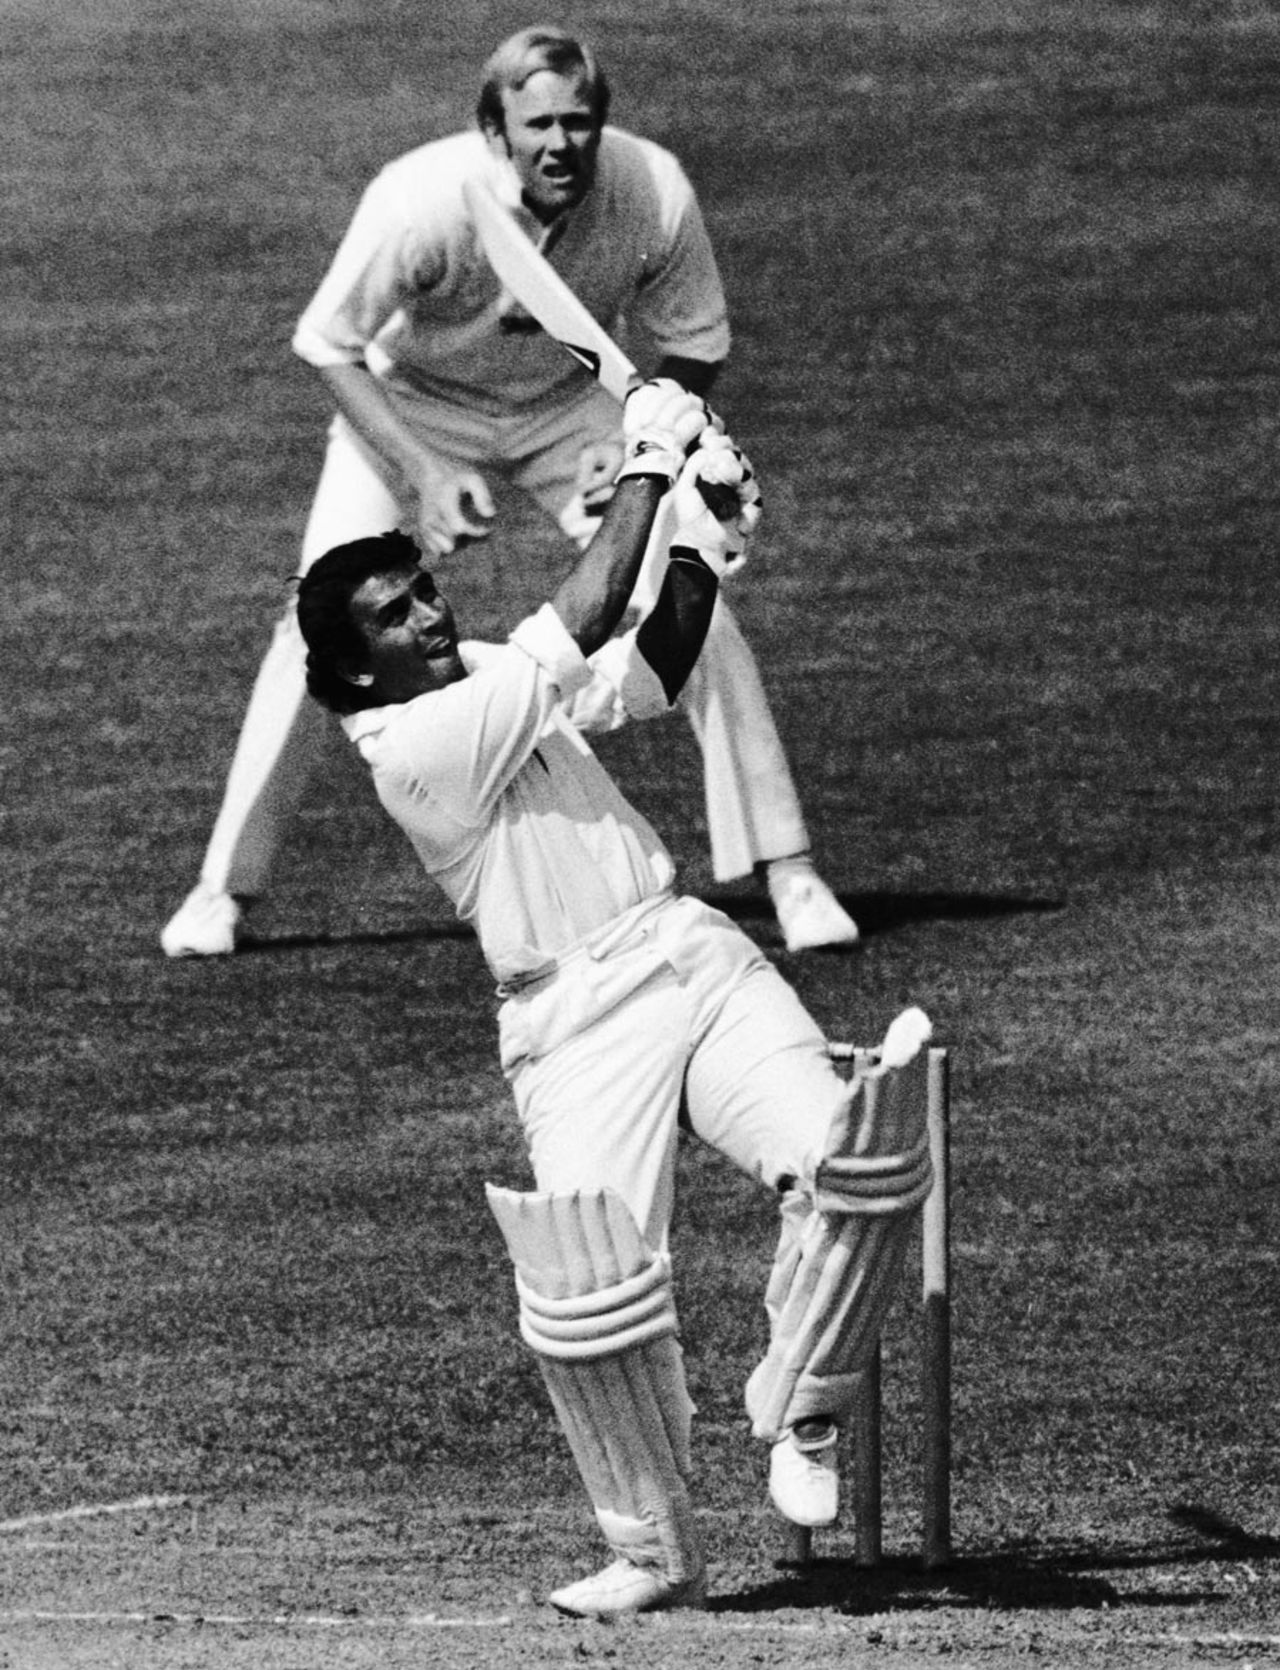 Sunil Gavaskar hits out, England v India, Lord's, World Cup, June 7, 1975